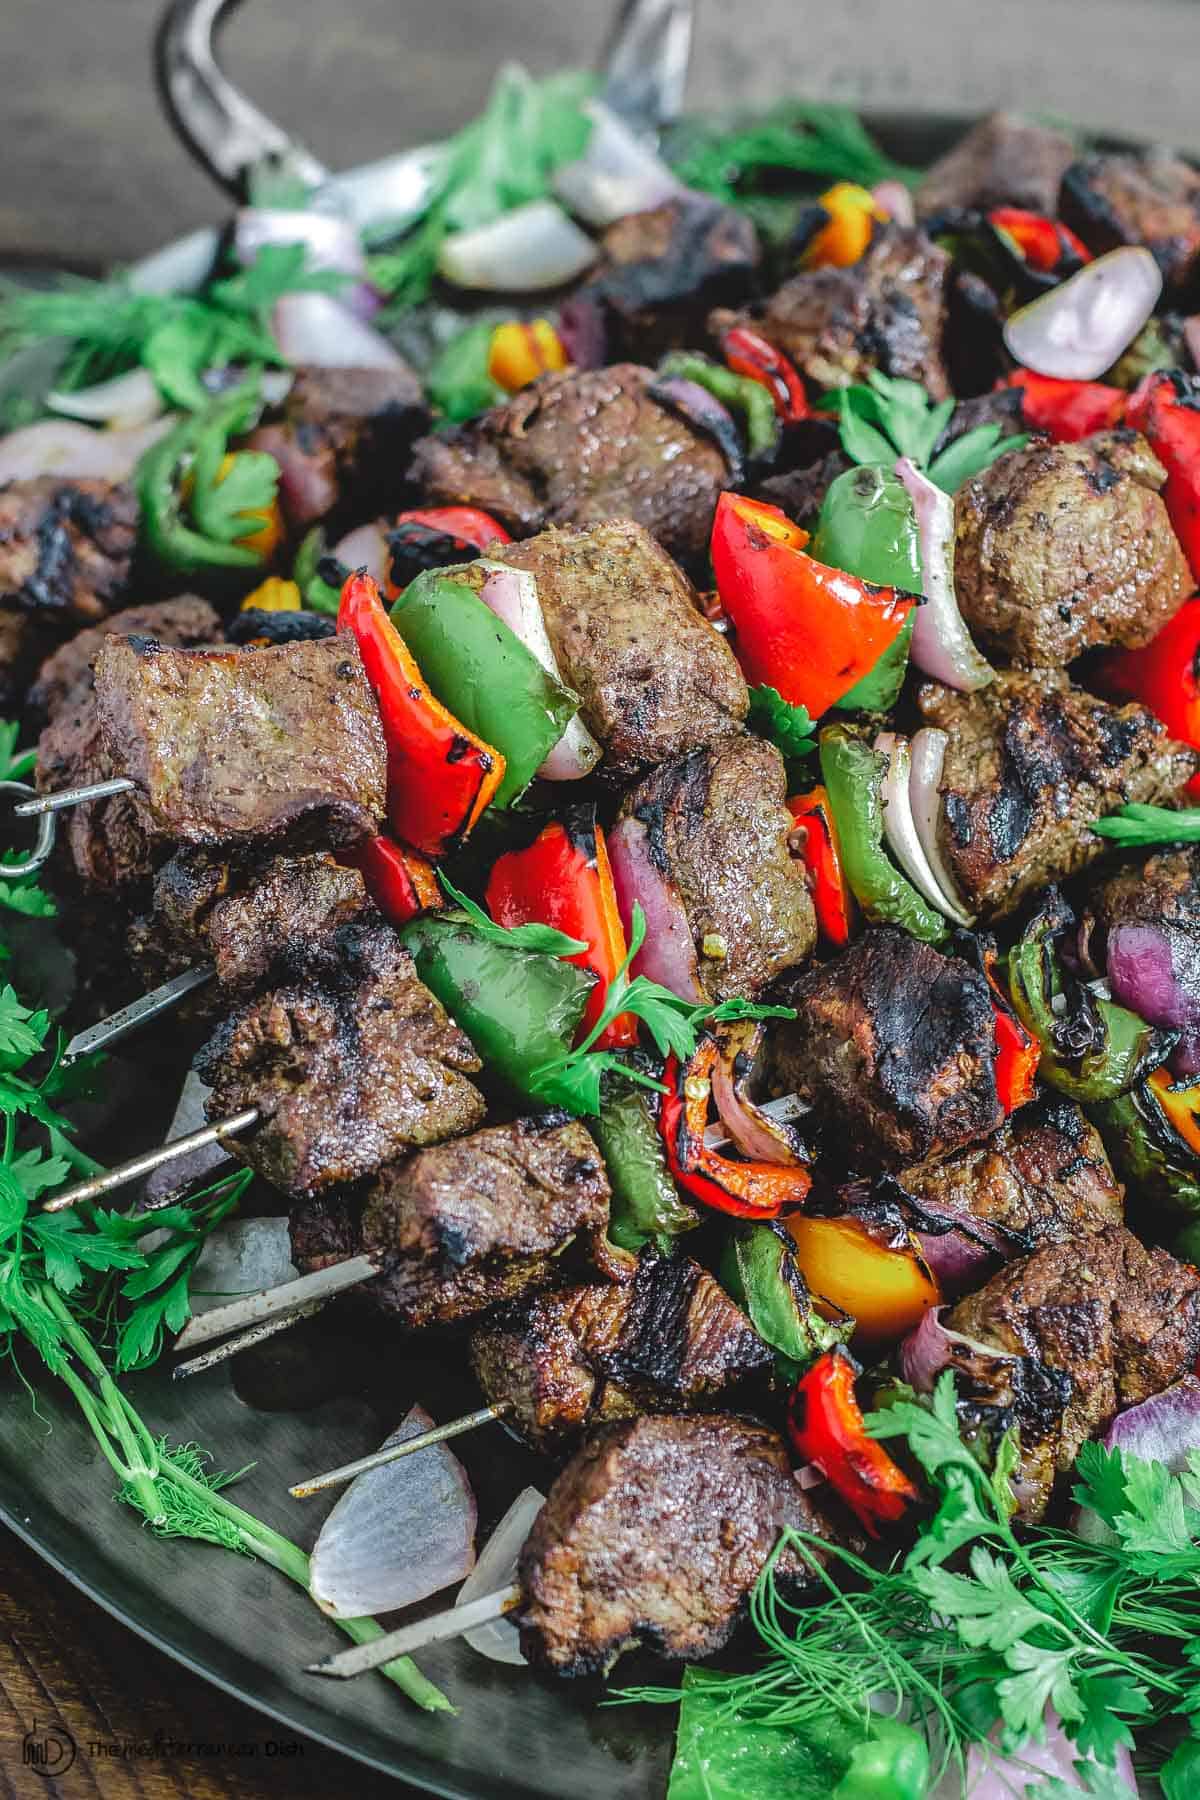 Armenian Shish Kebab - Skewered Lamb Cooked Over Hot Coals